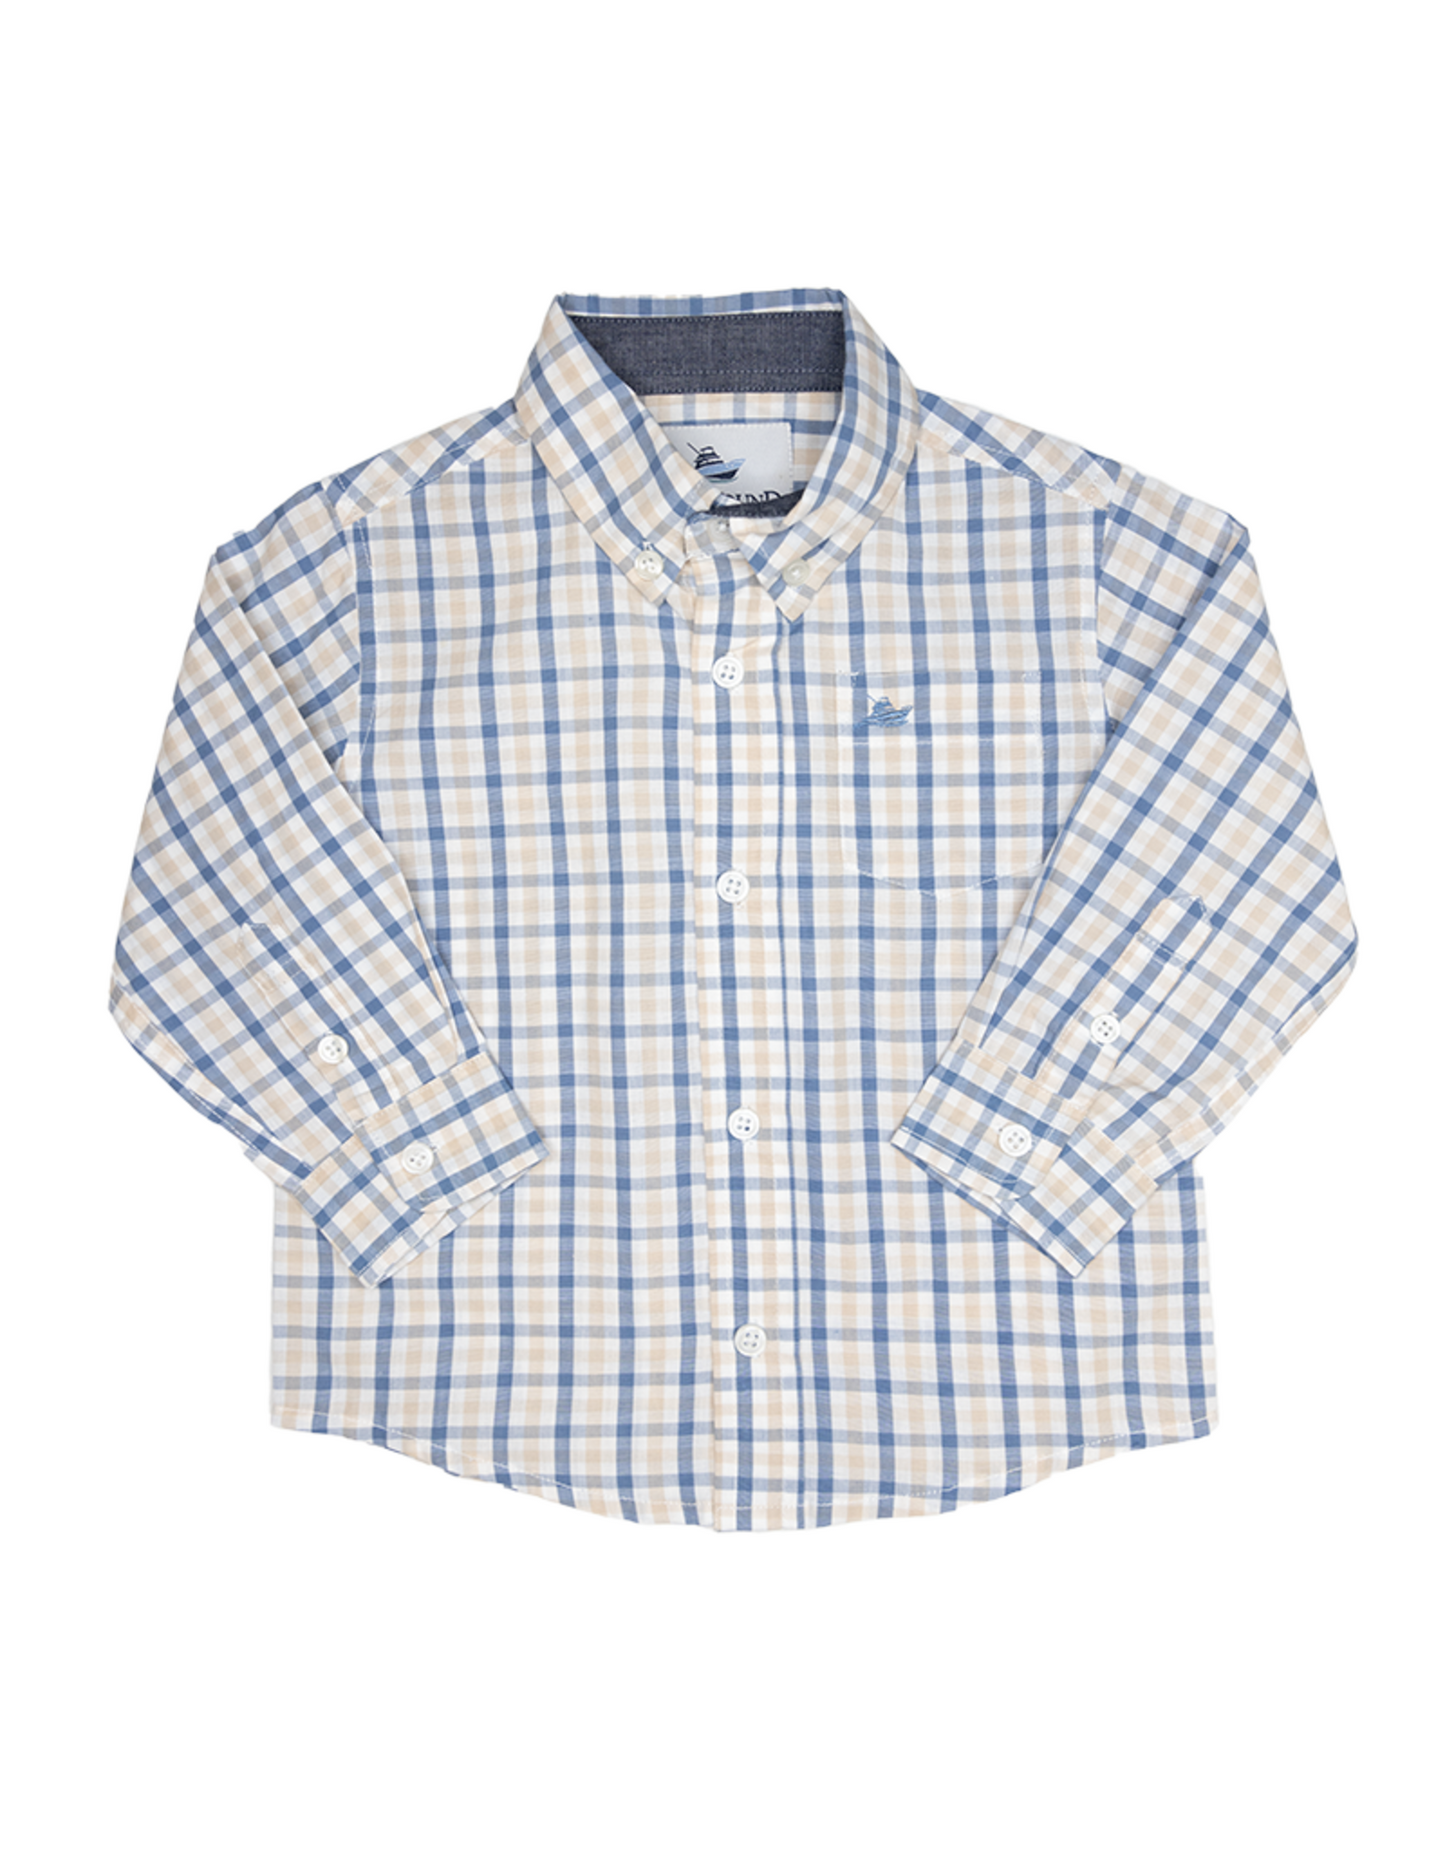 SouthBound Dress Shirt - Blue/Khaki